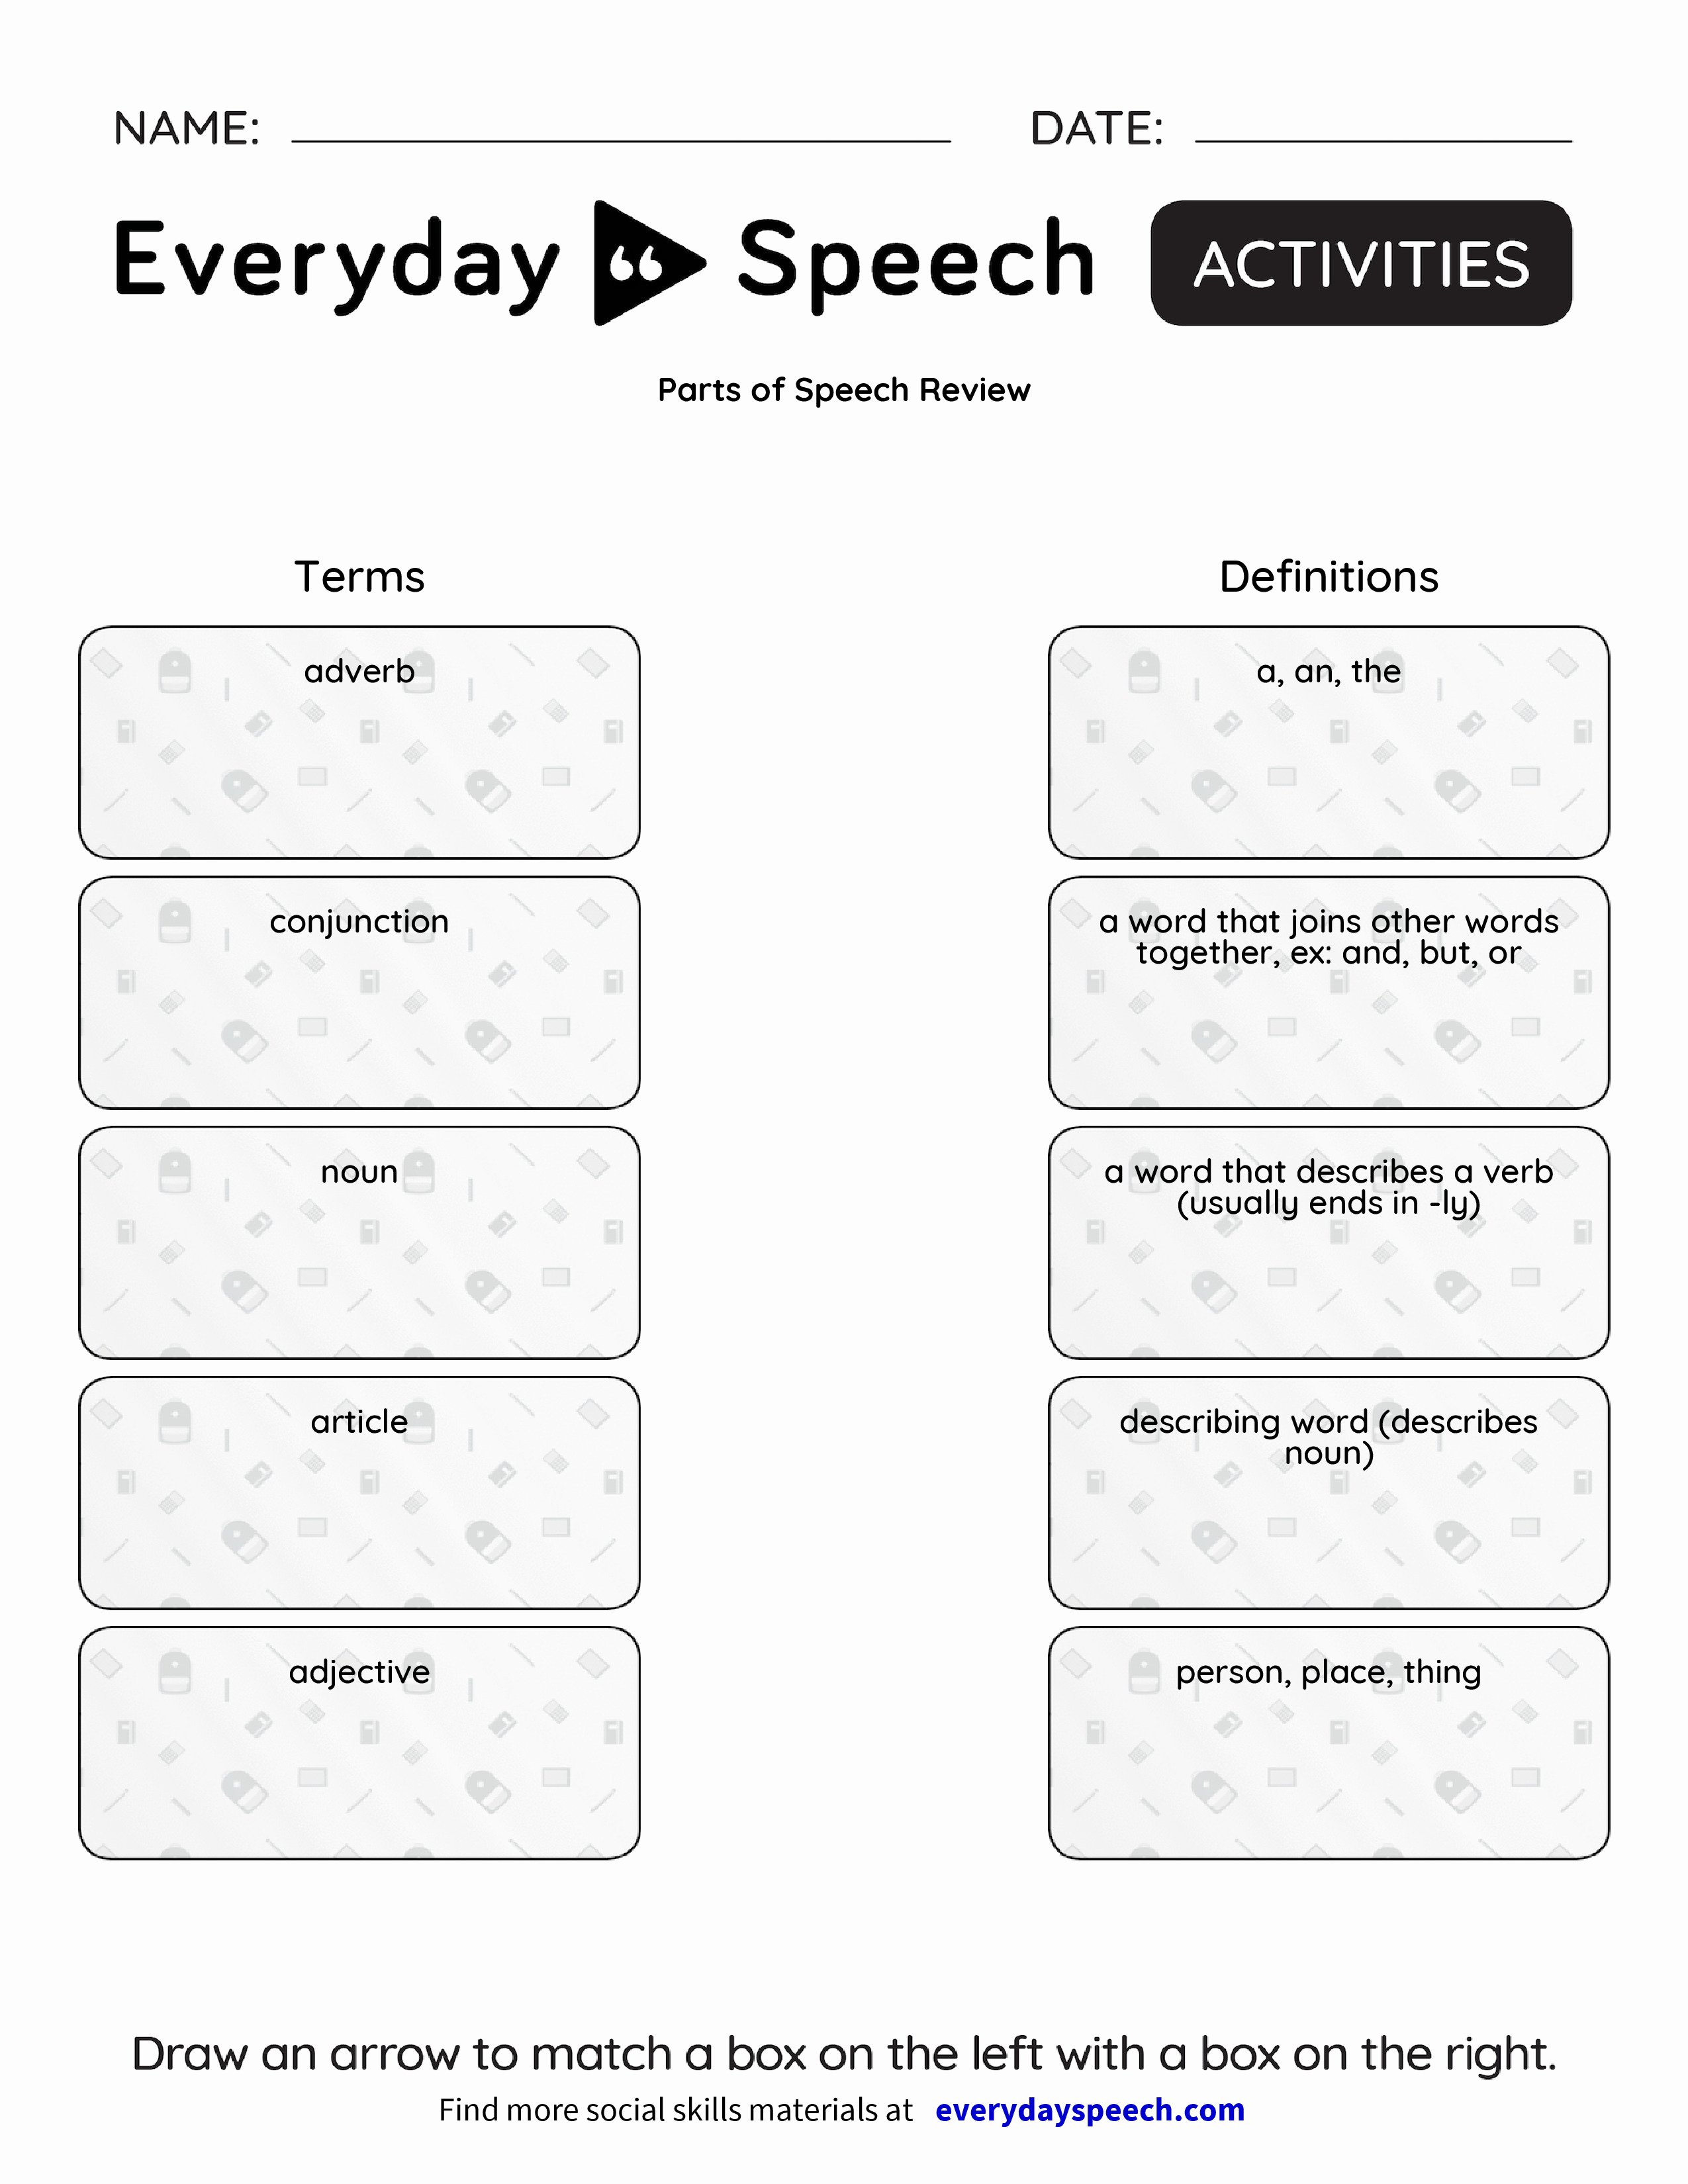 Parts Of Speech Review Worksheet Elegant Parts Of Speech Review Everyday Speech Everyday Speech